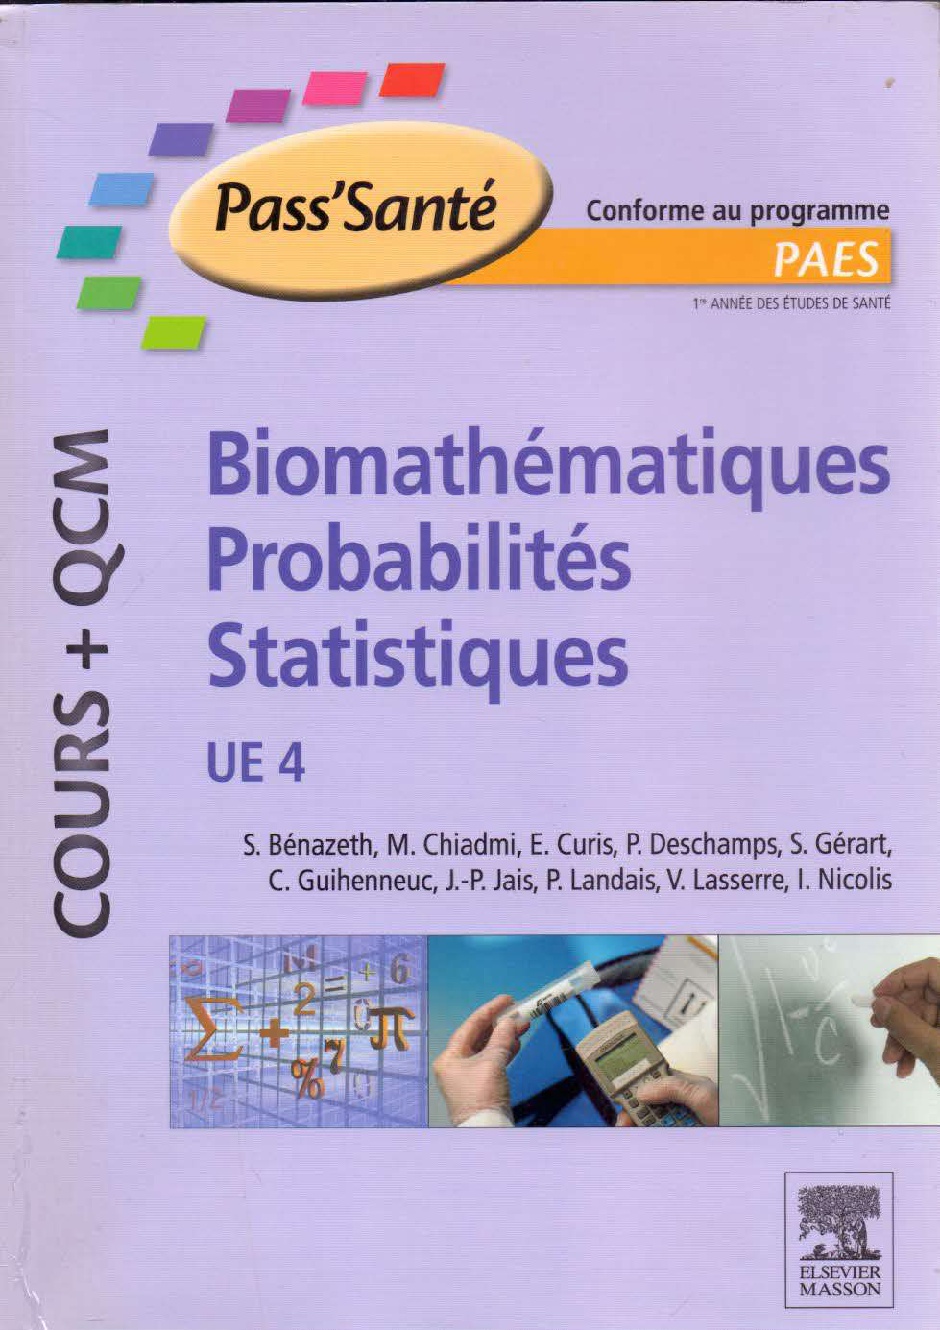 Biostatistiques - Probabilités